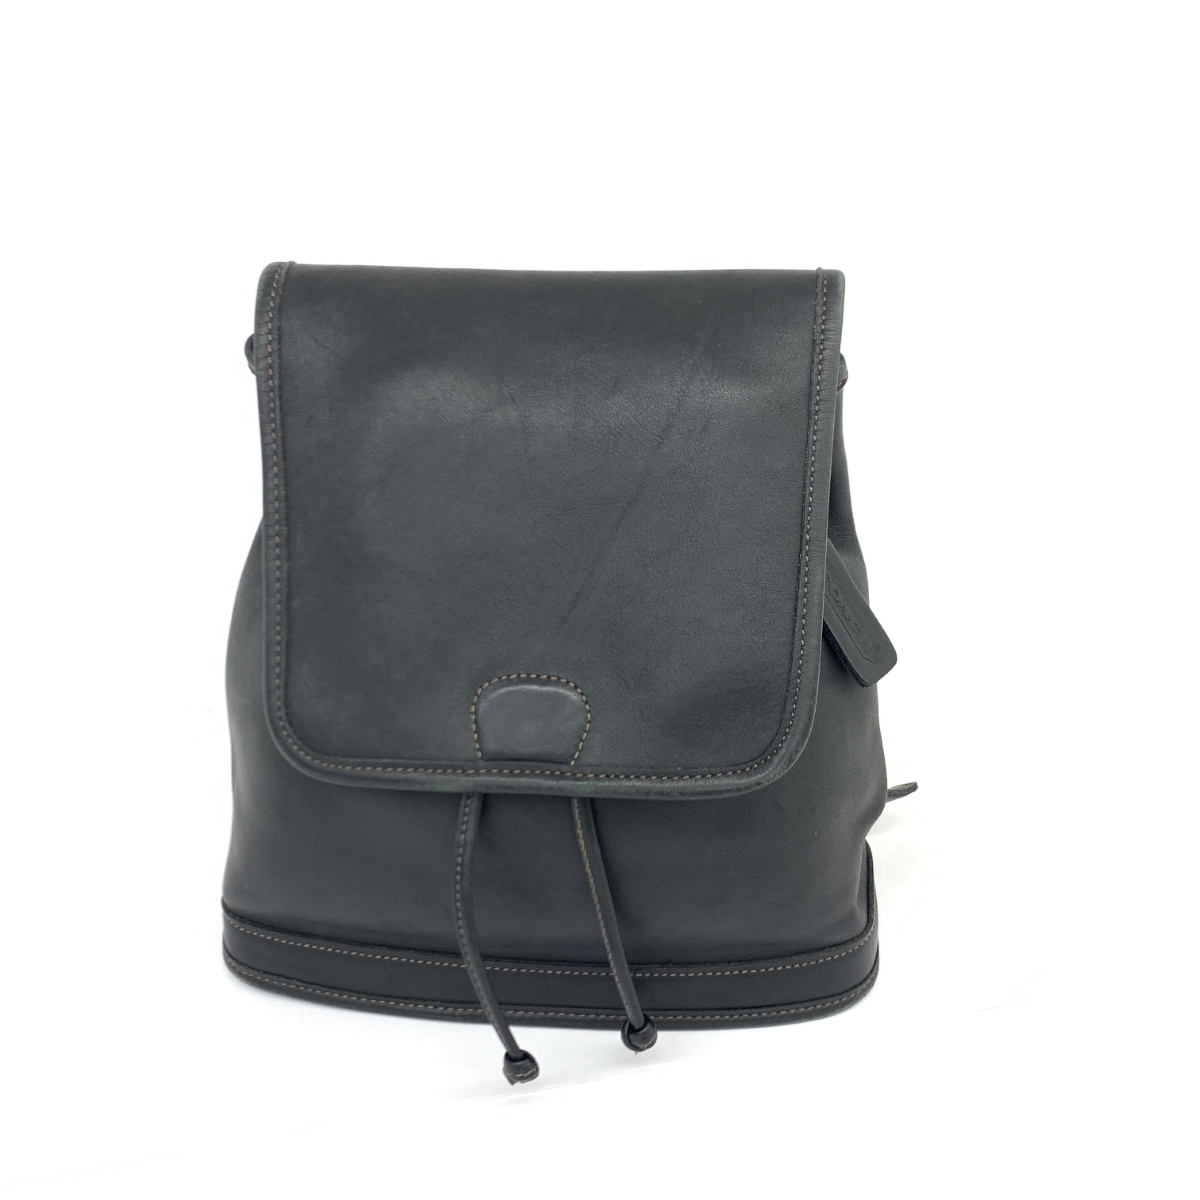 ◆OLD COACH オールドコーチ リュックサック◆9315 ブラック レザー レディース バックパック bag 鞄